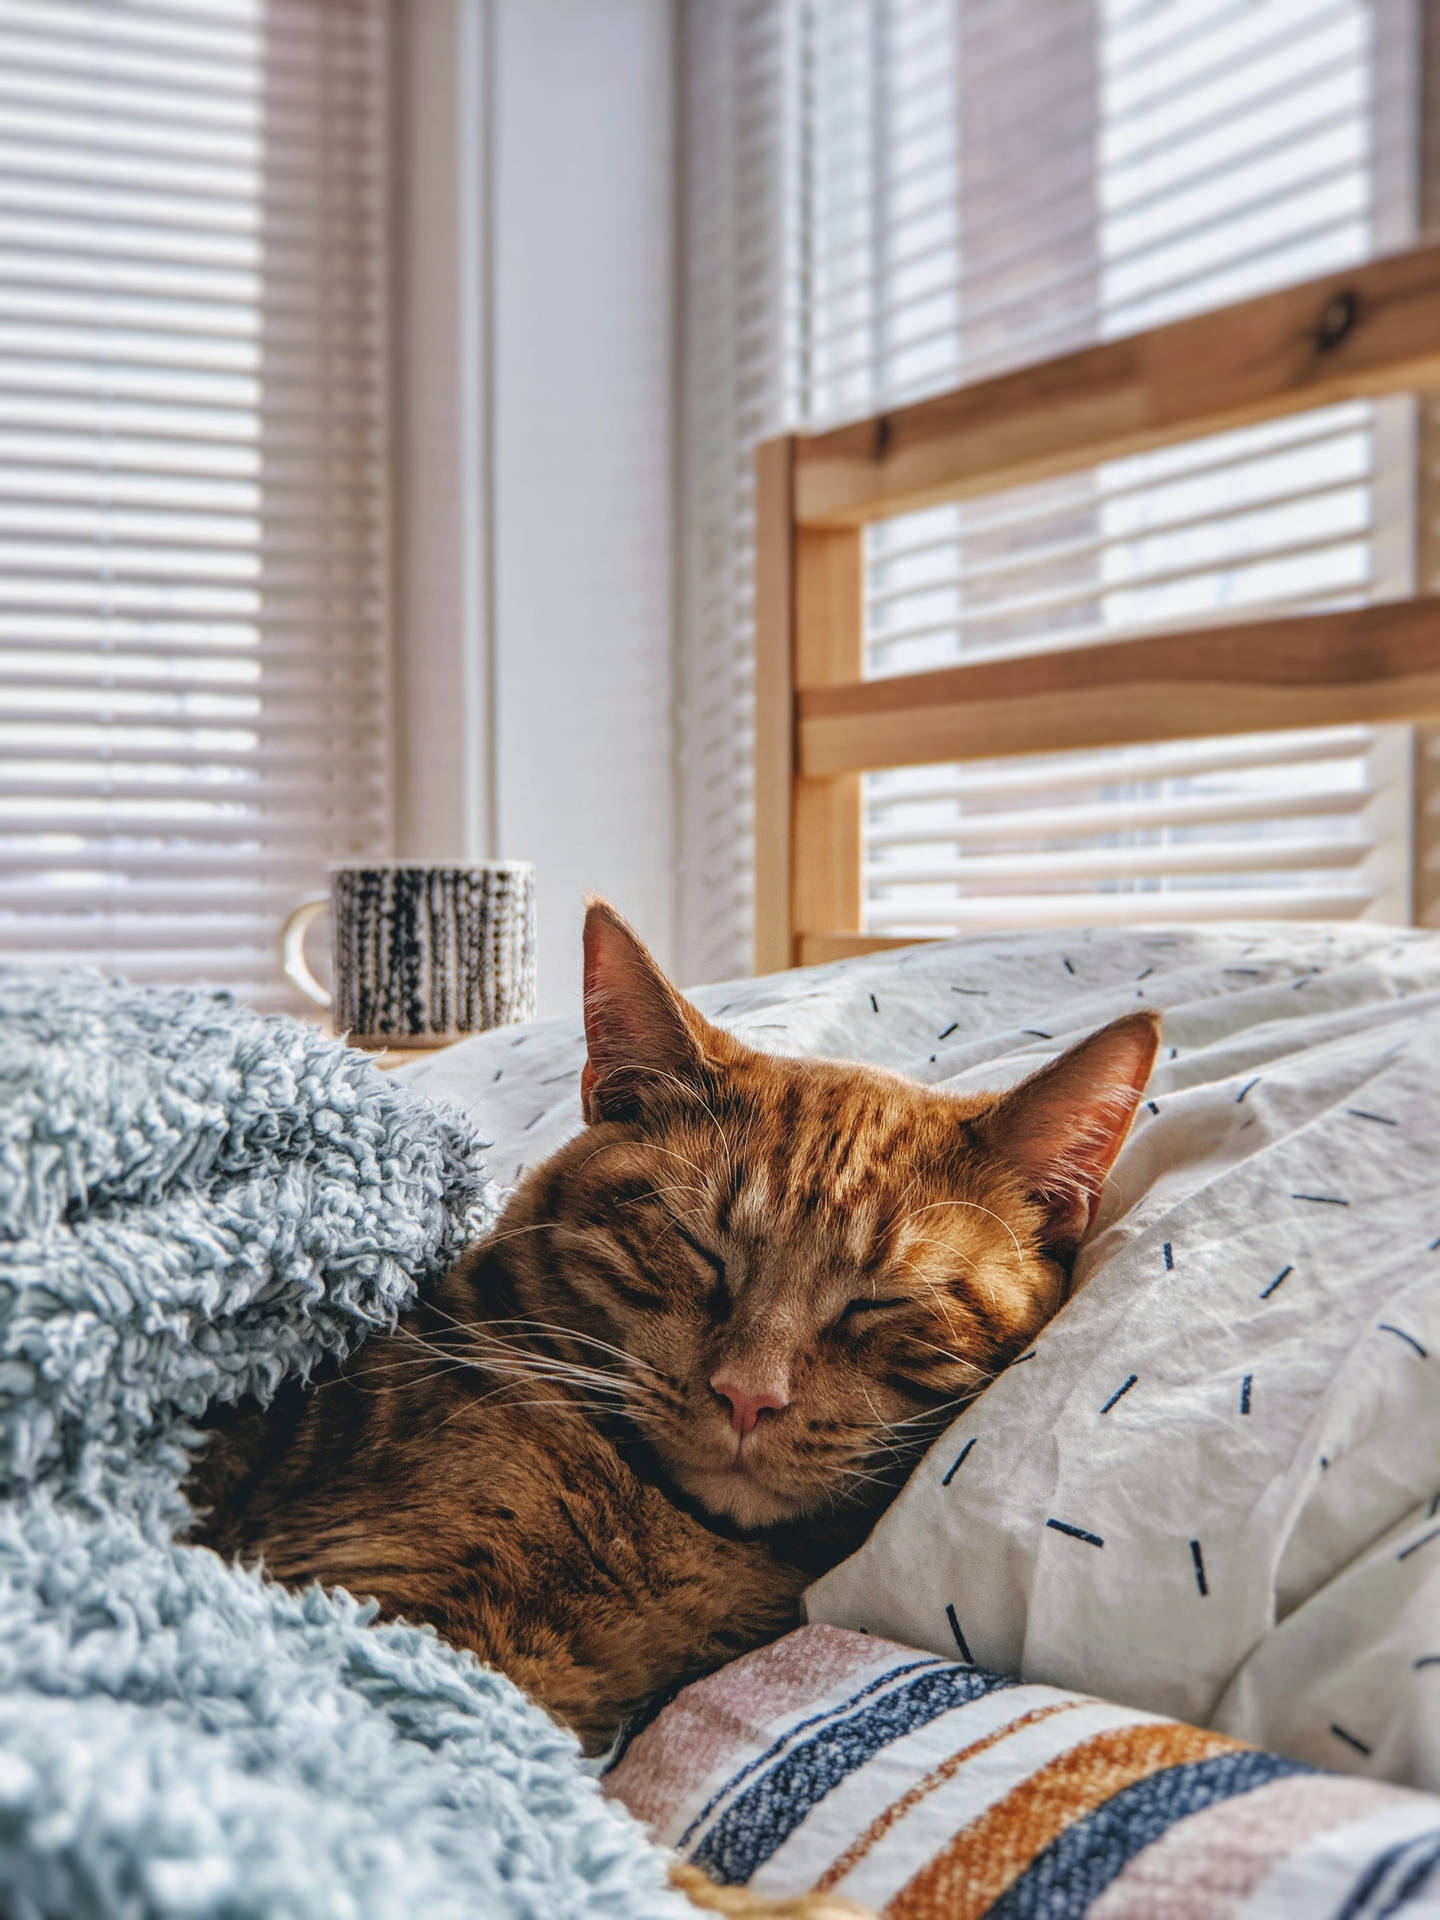 Sleeping Home Cat Background